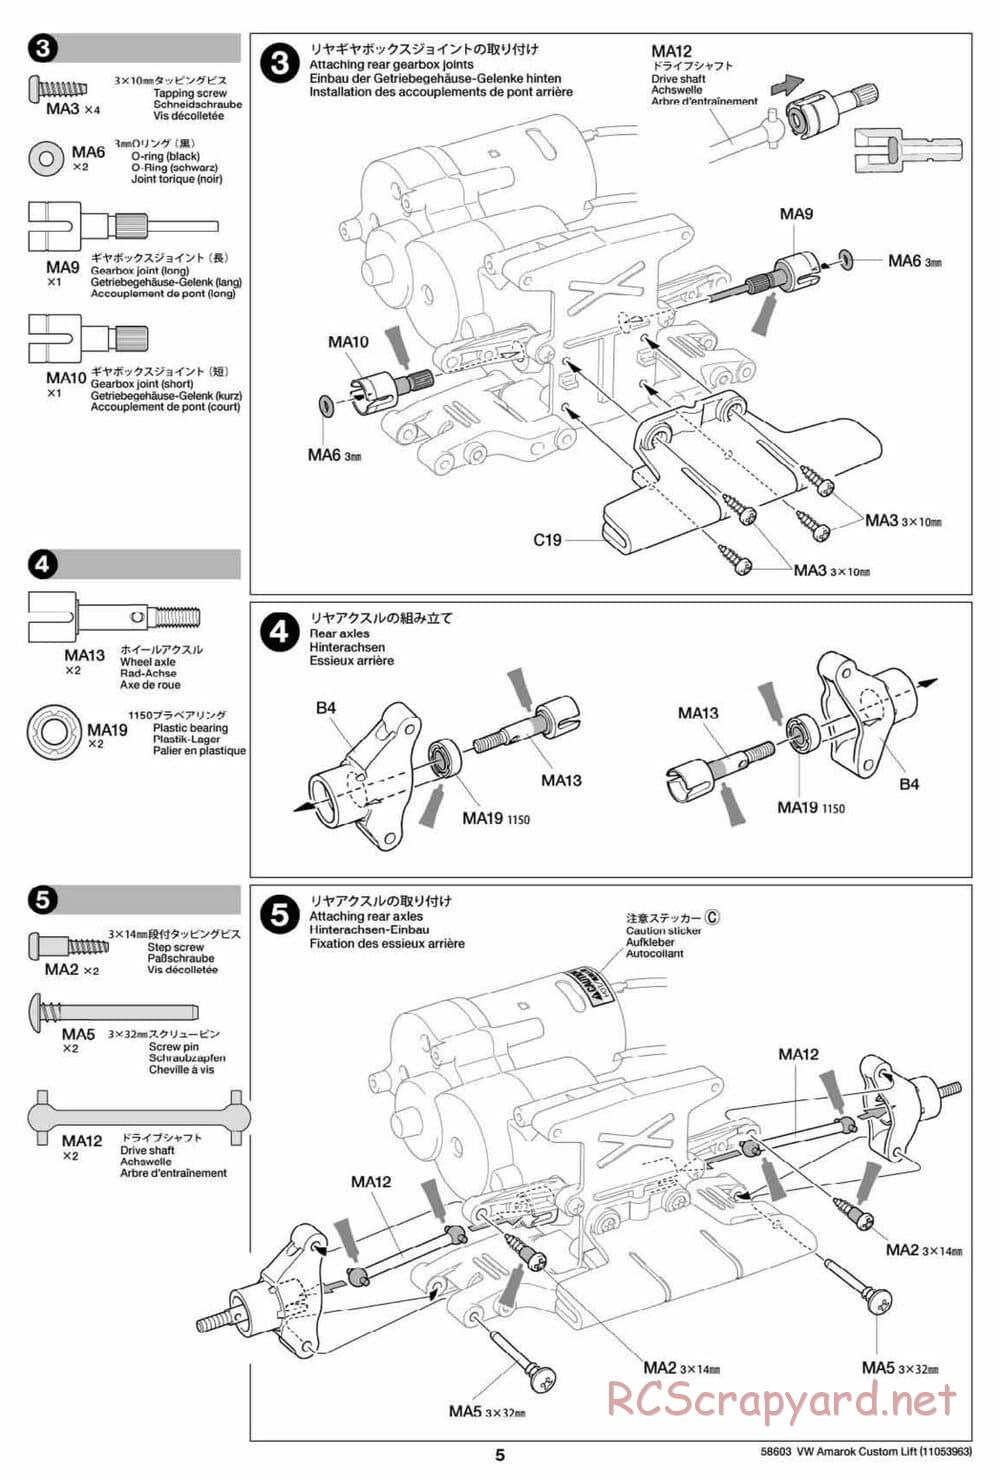 Tamiya - Volkswagen Amarok Custom Lift - WT-01N Chassis - Manual - Page 5